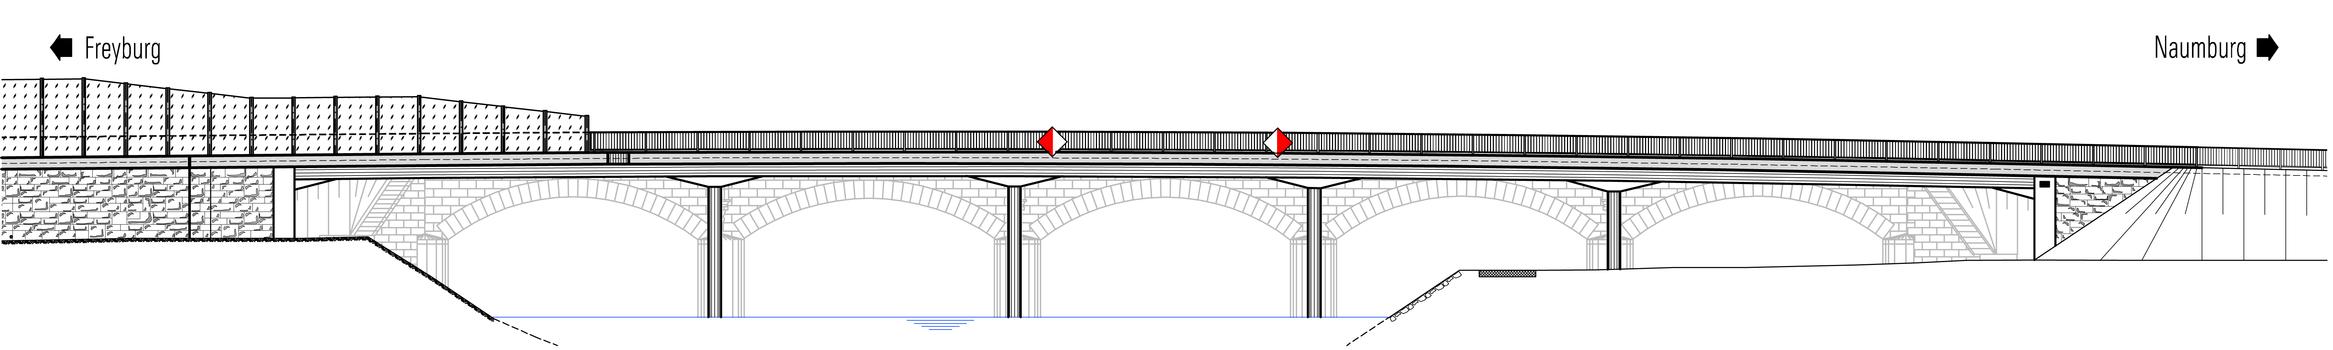 Saalebrücke Naumburg-Roßbach (B 180) - élévation